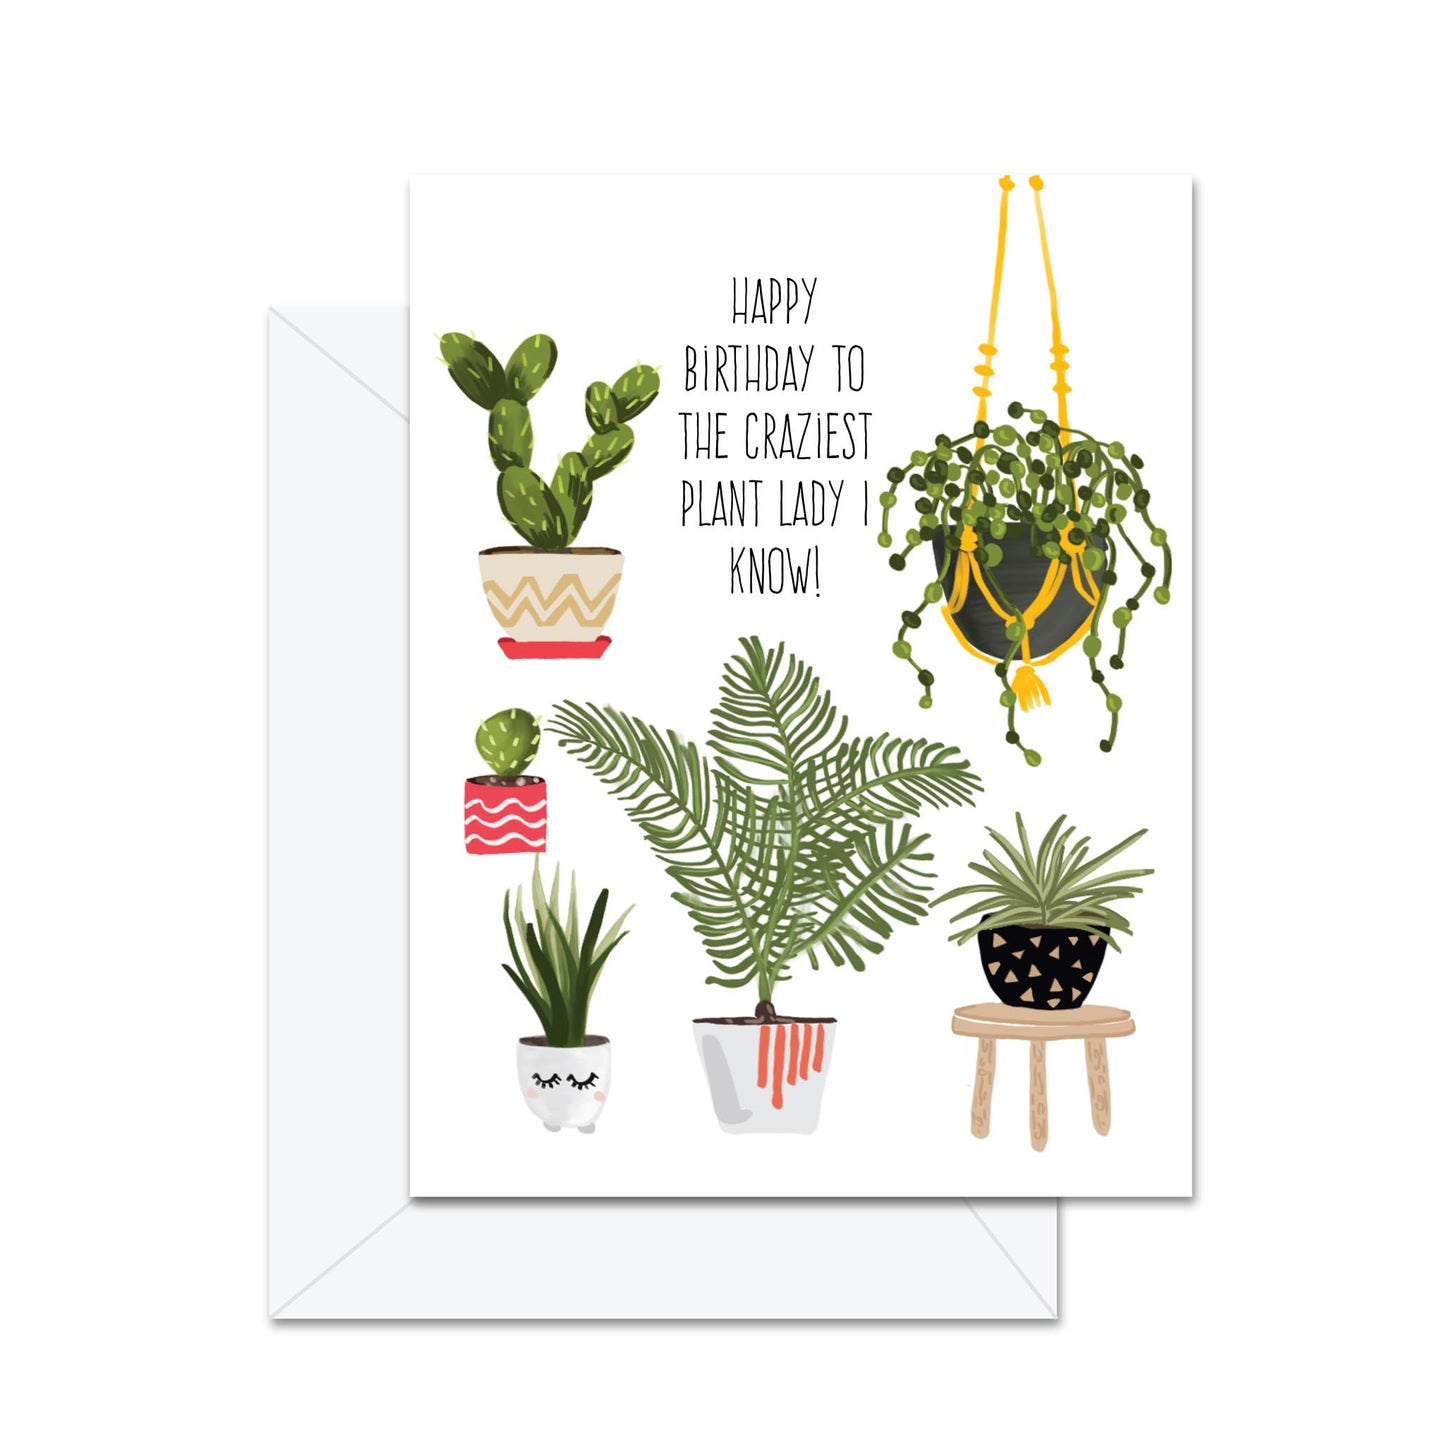 Happy Birthday To The Craziest Plant Lady I Know! - Greeting Card